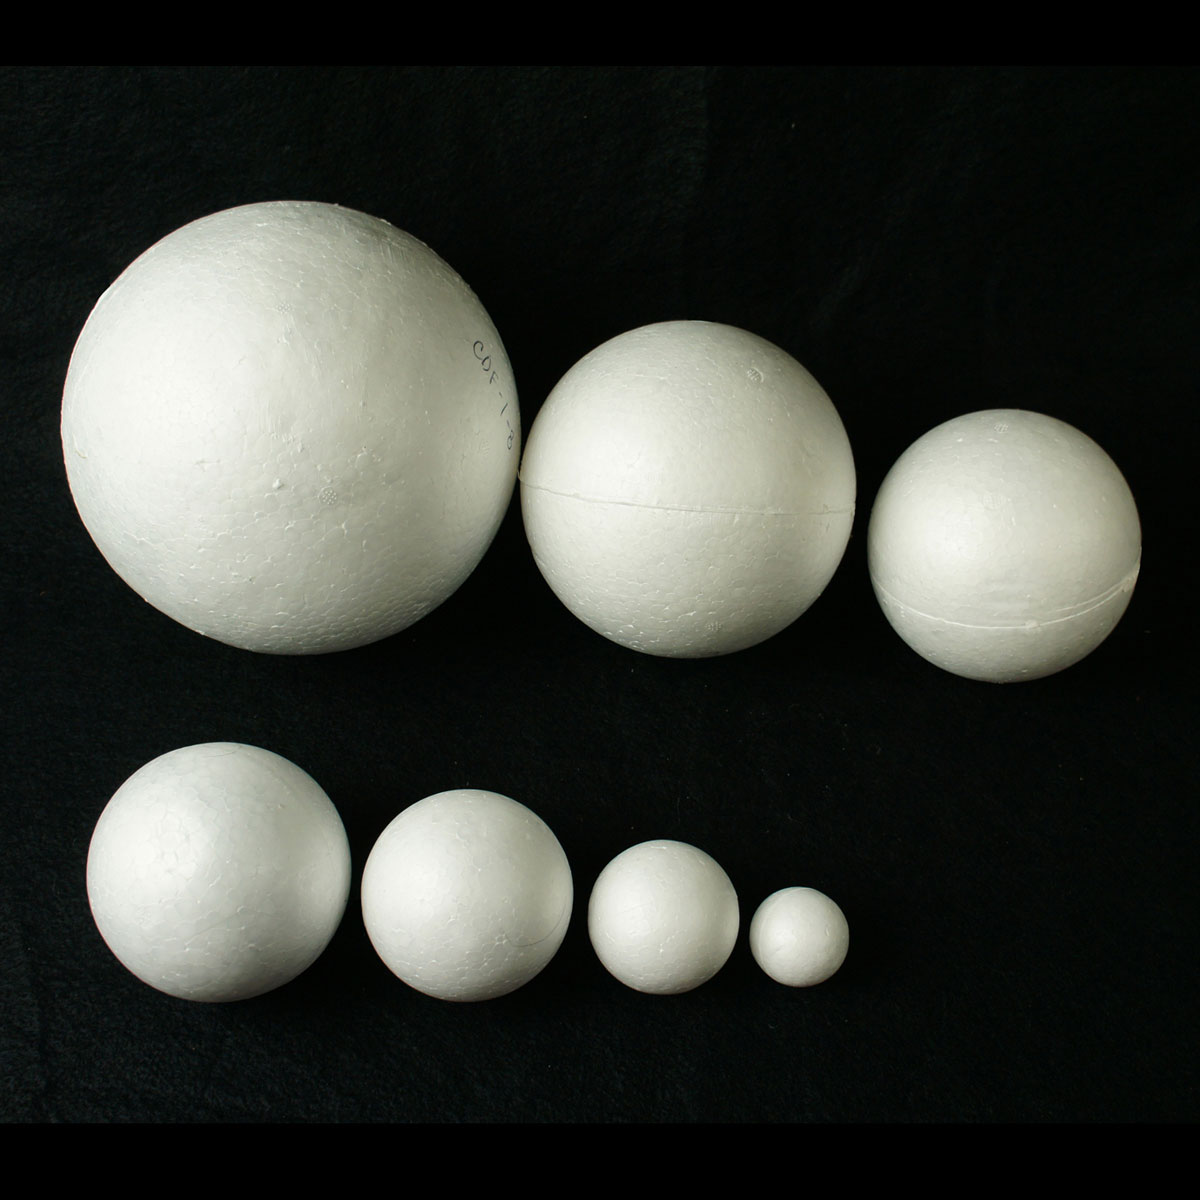 4 Inch Foam Balls 